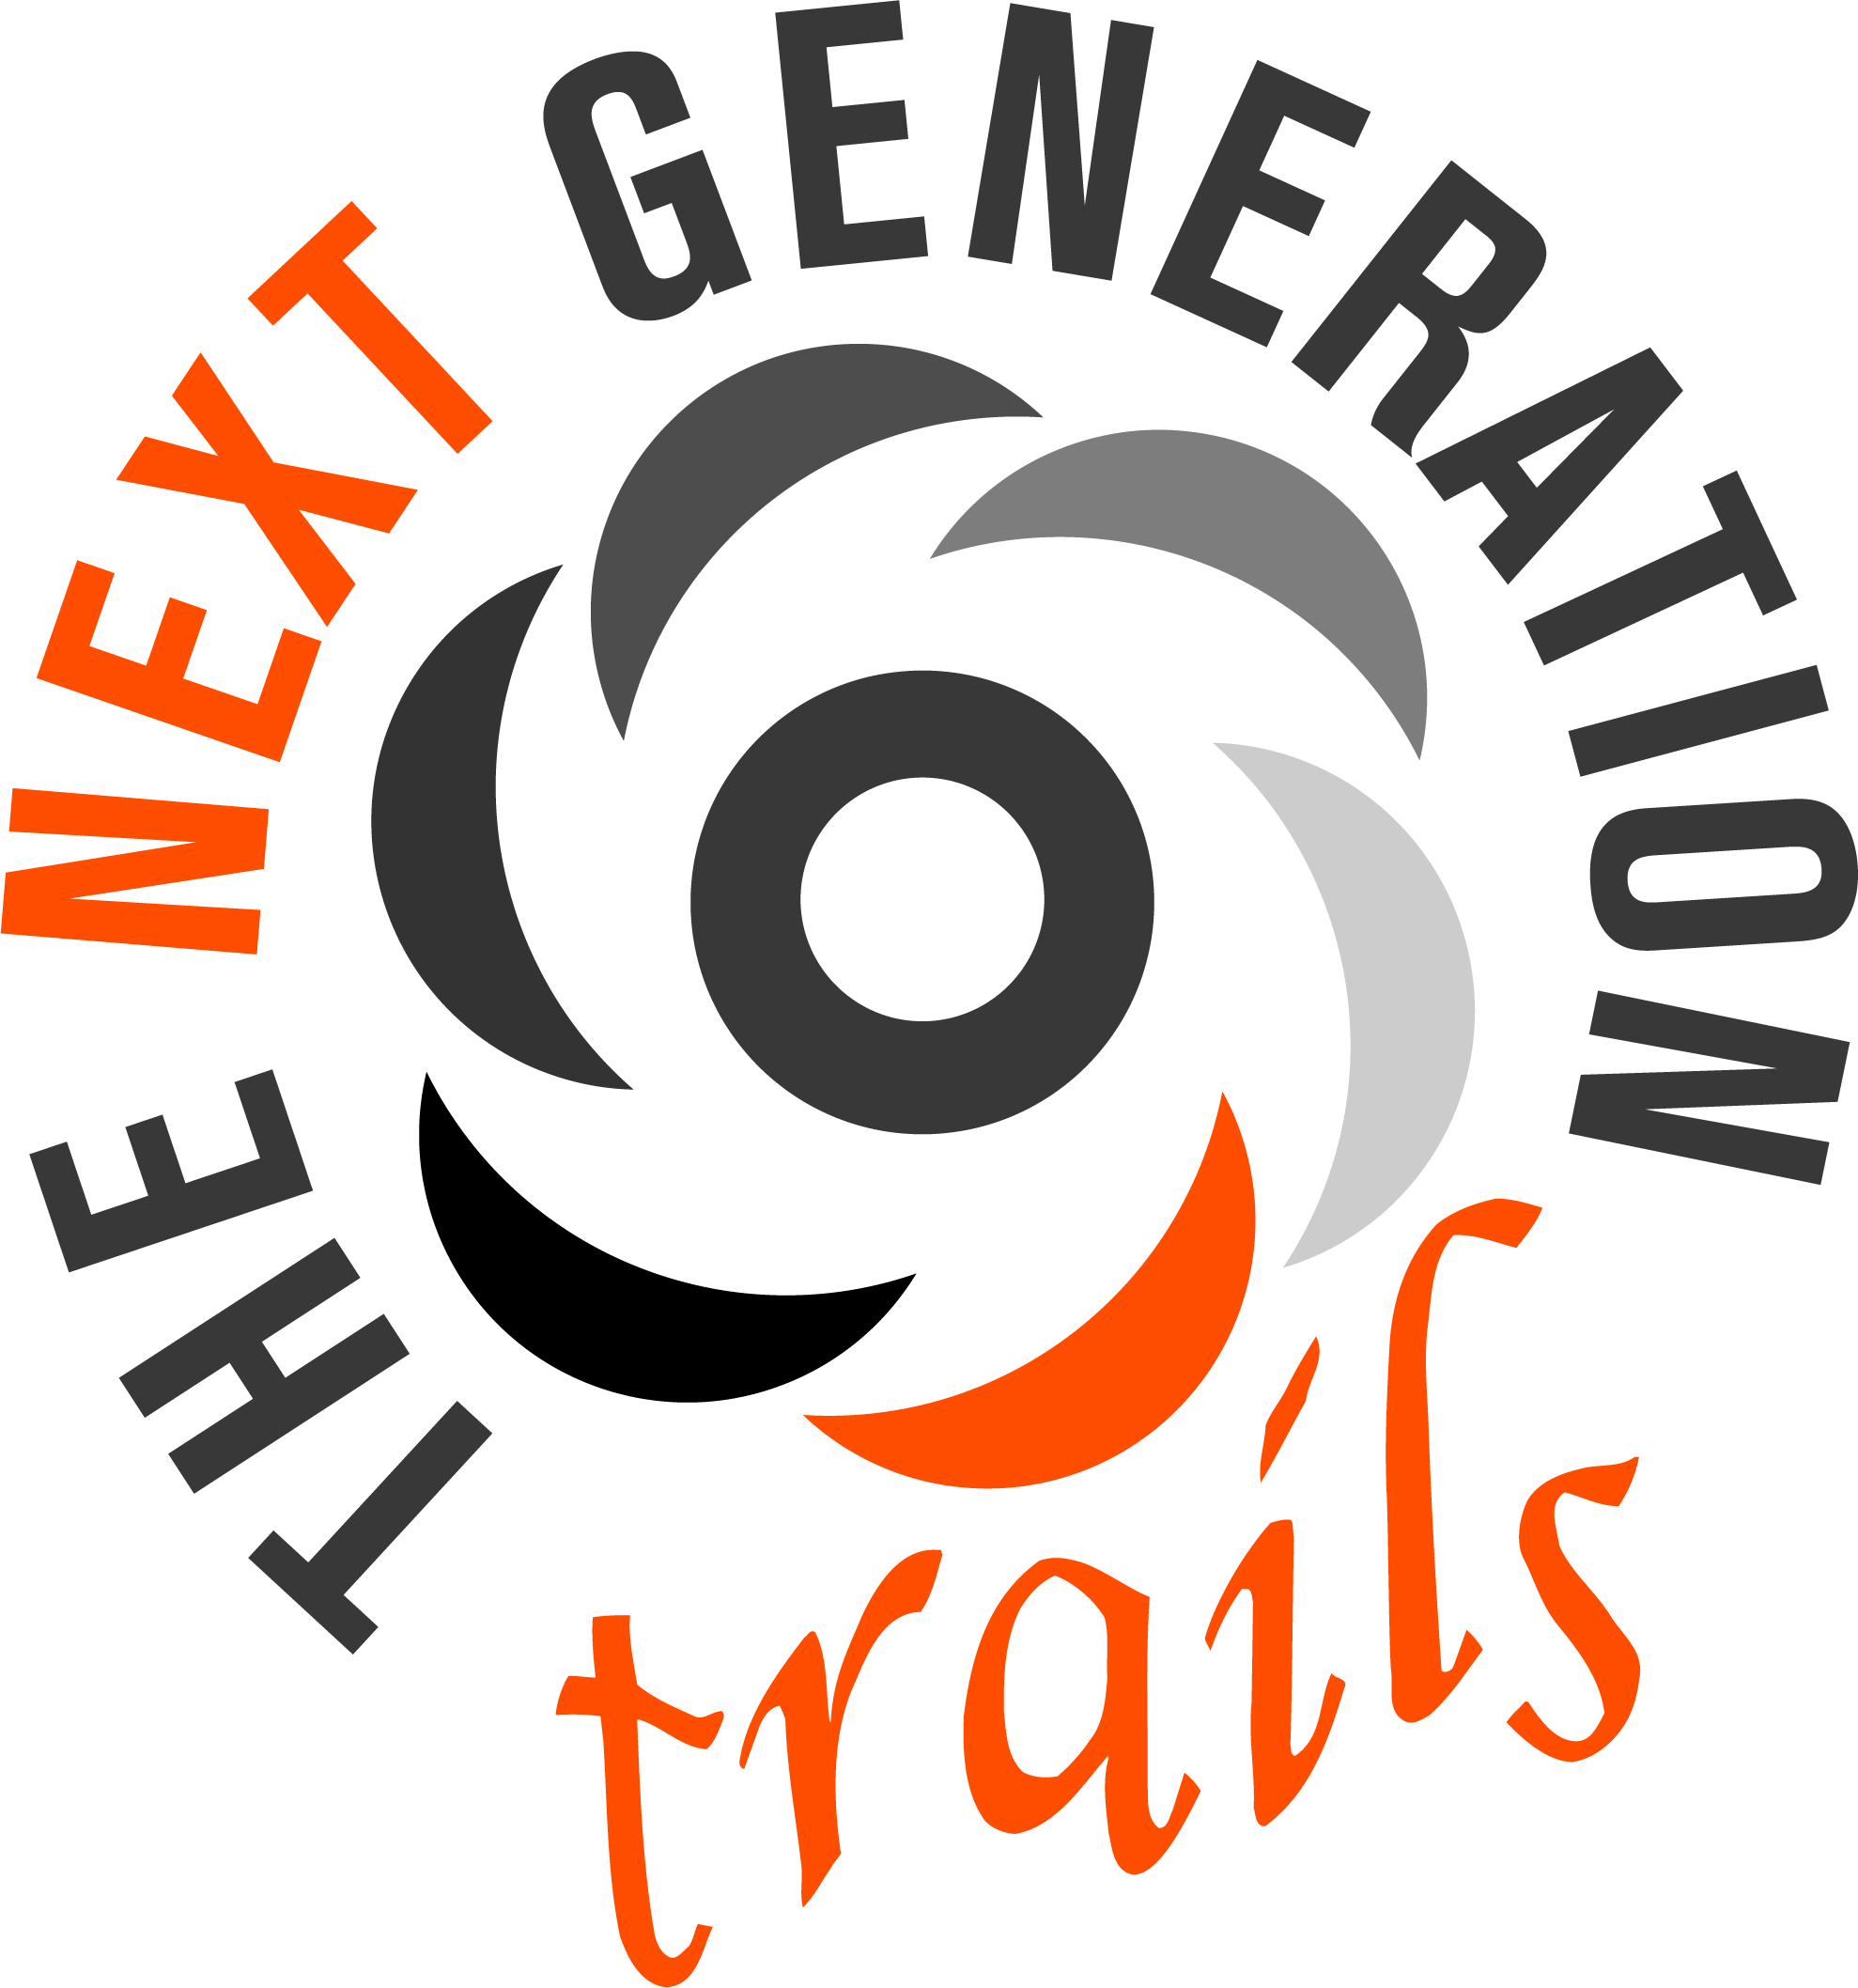 trails next logo 